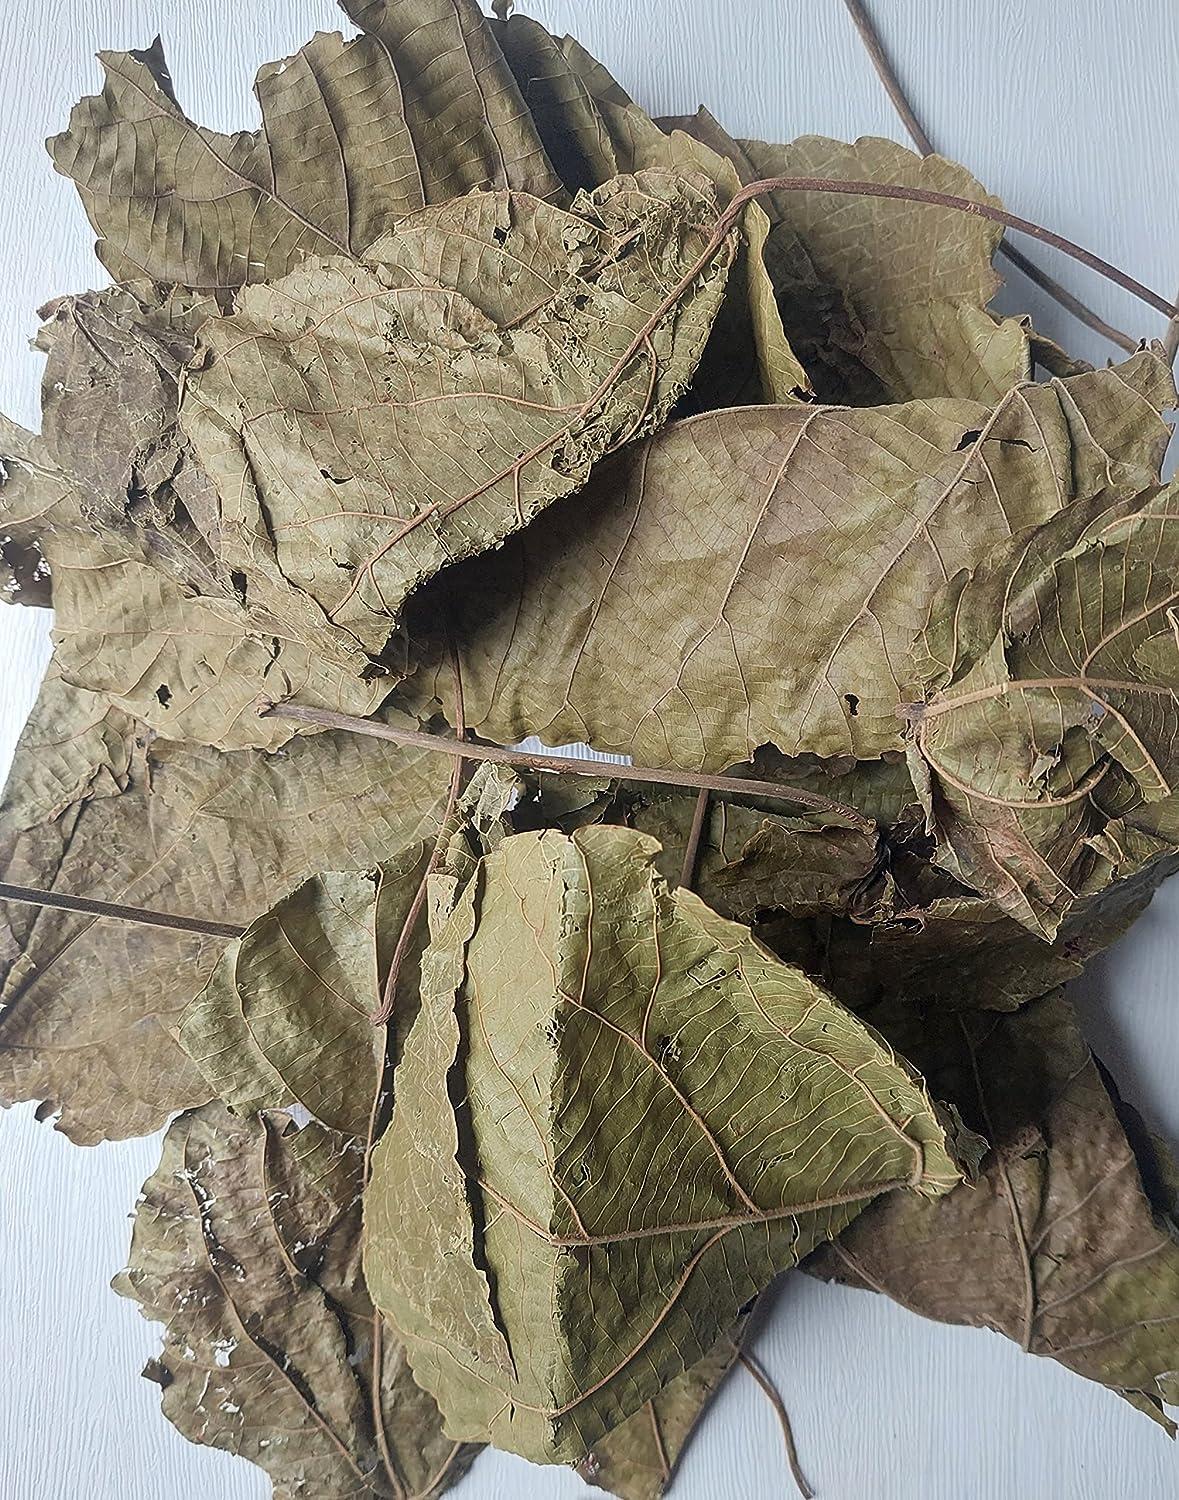 DJEKA Leaves (Alchornea Cordifolia)